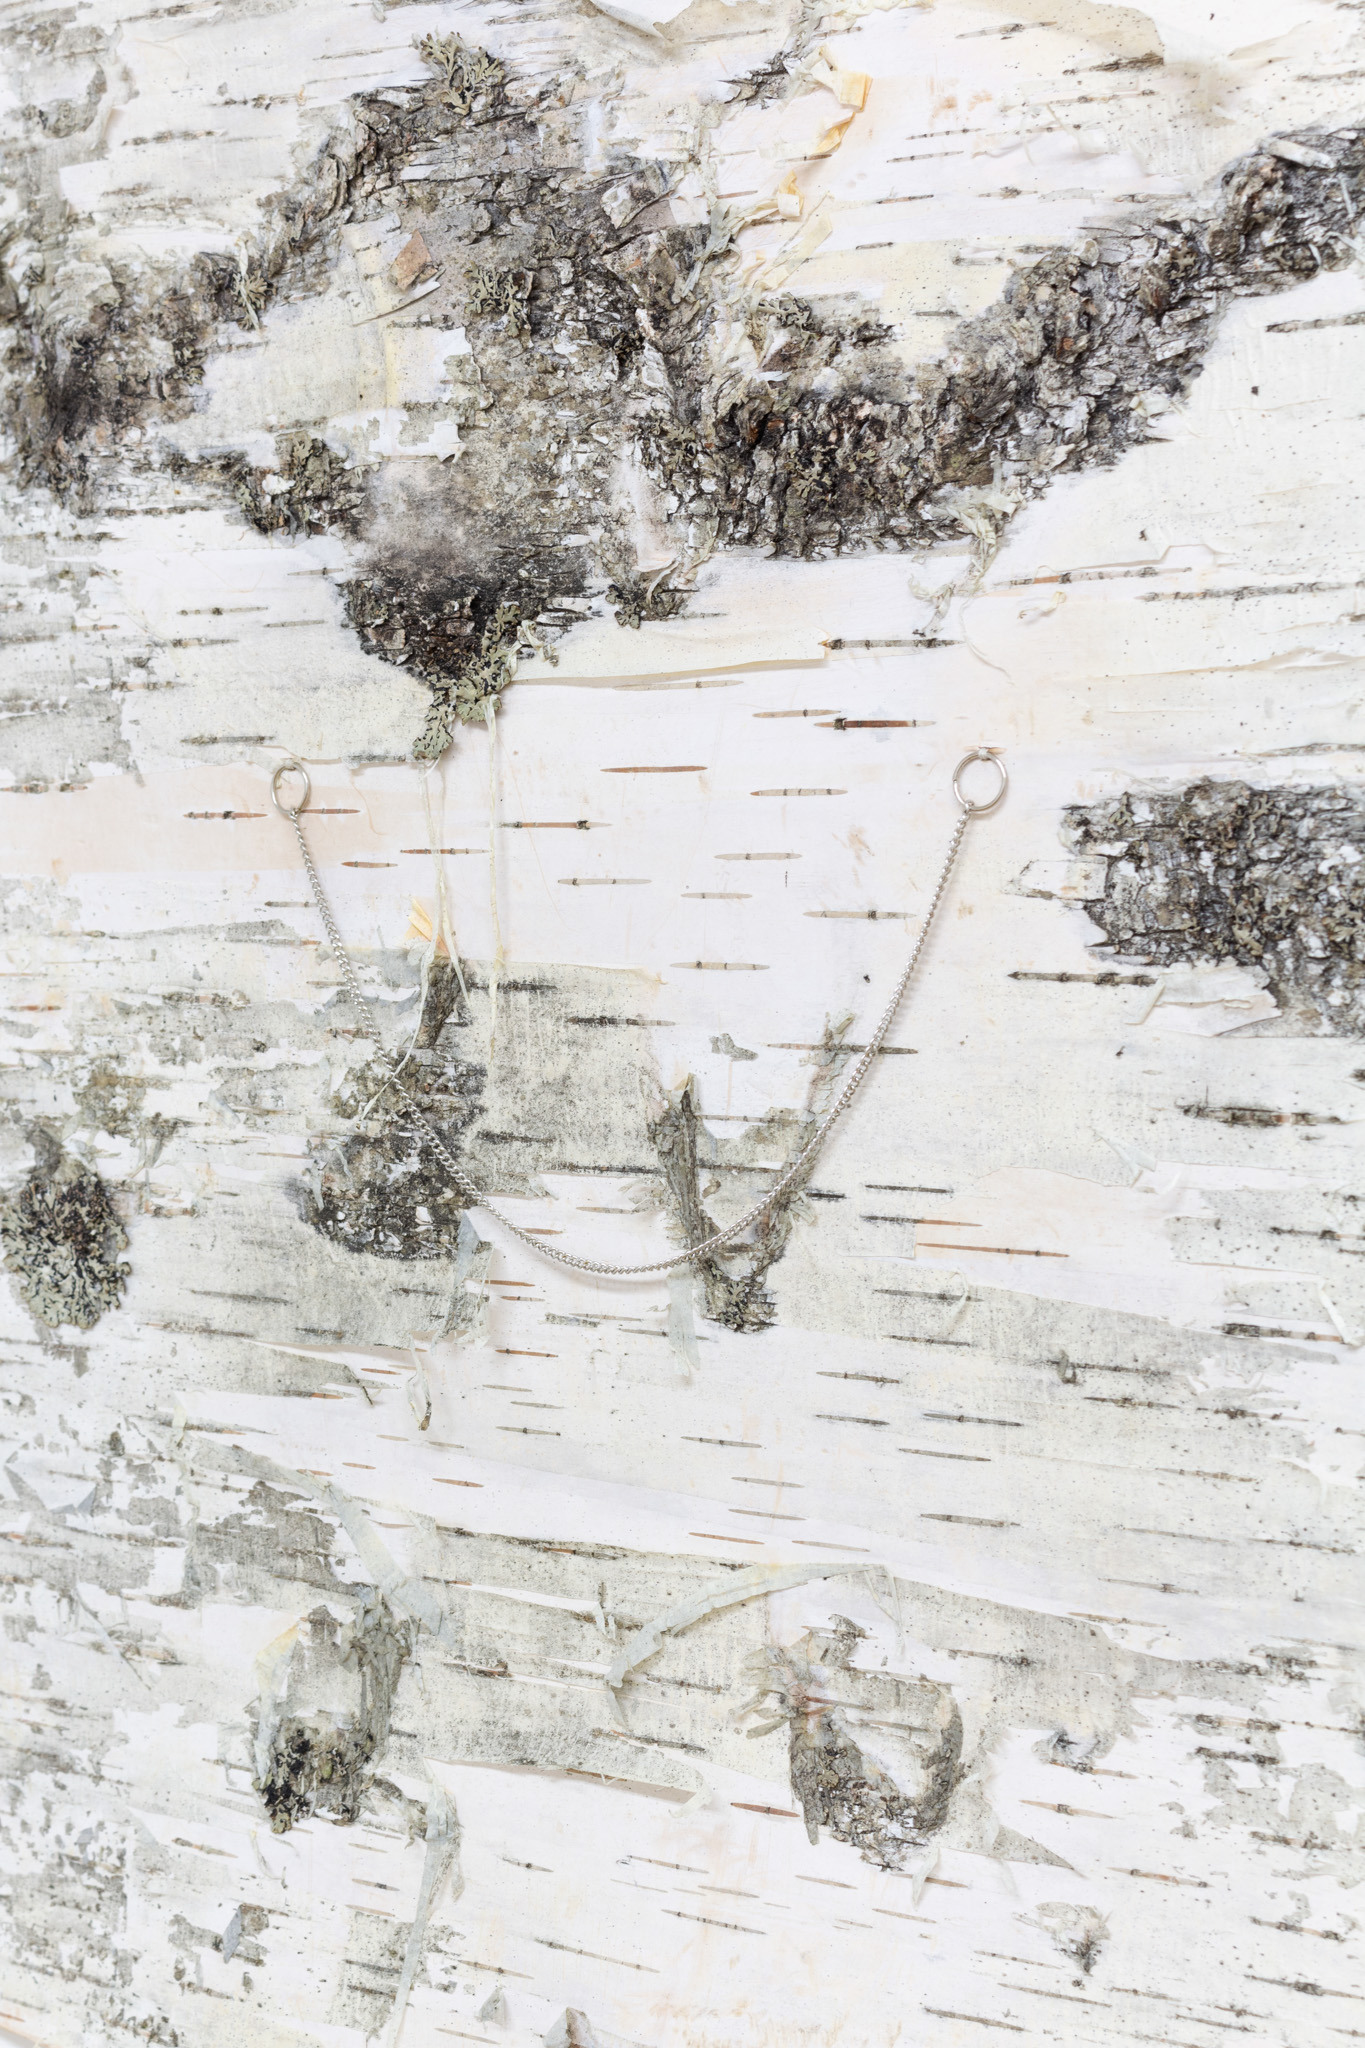 Melanie Wiksell, Draped dwelling, 2022, Birch bark, silver chain, sealing wax, 19.6 x 19.6 in